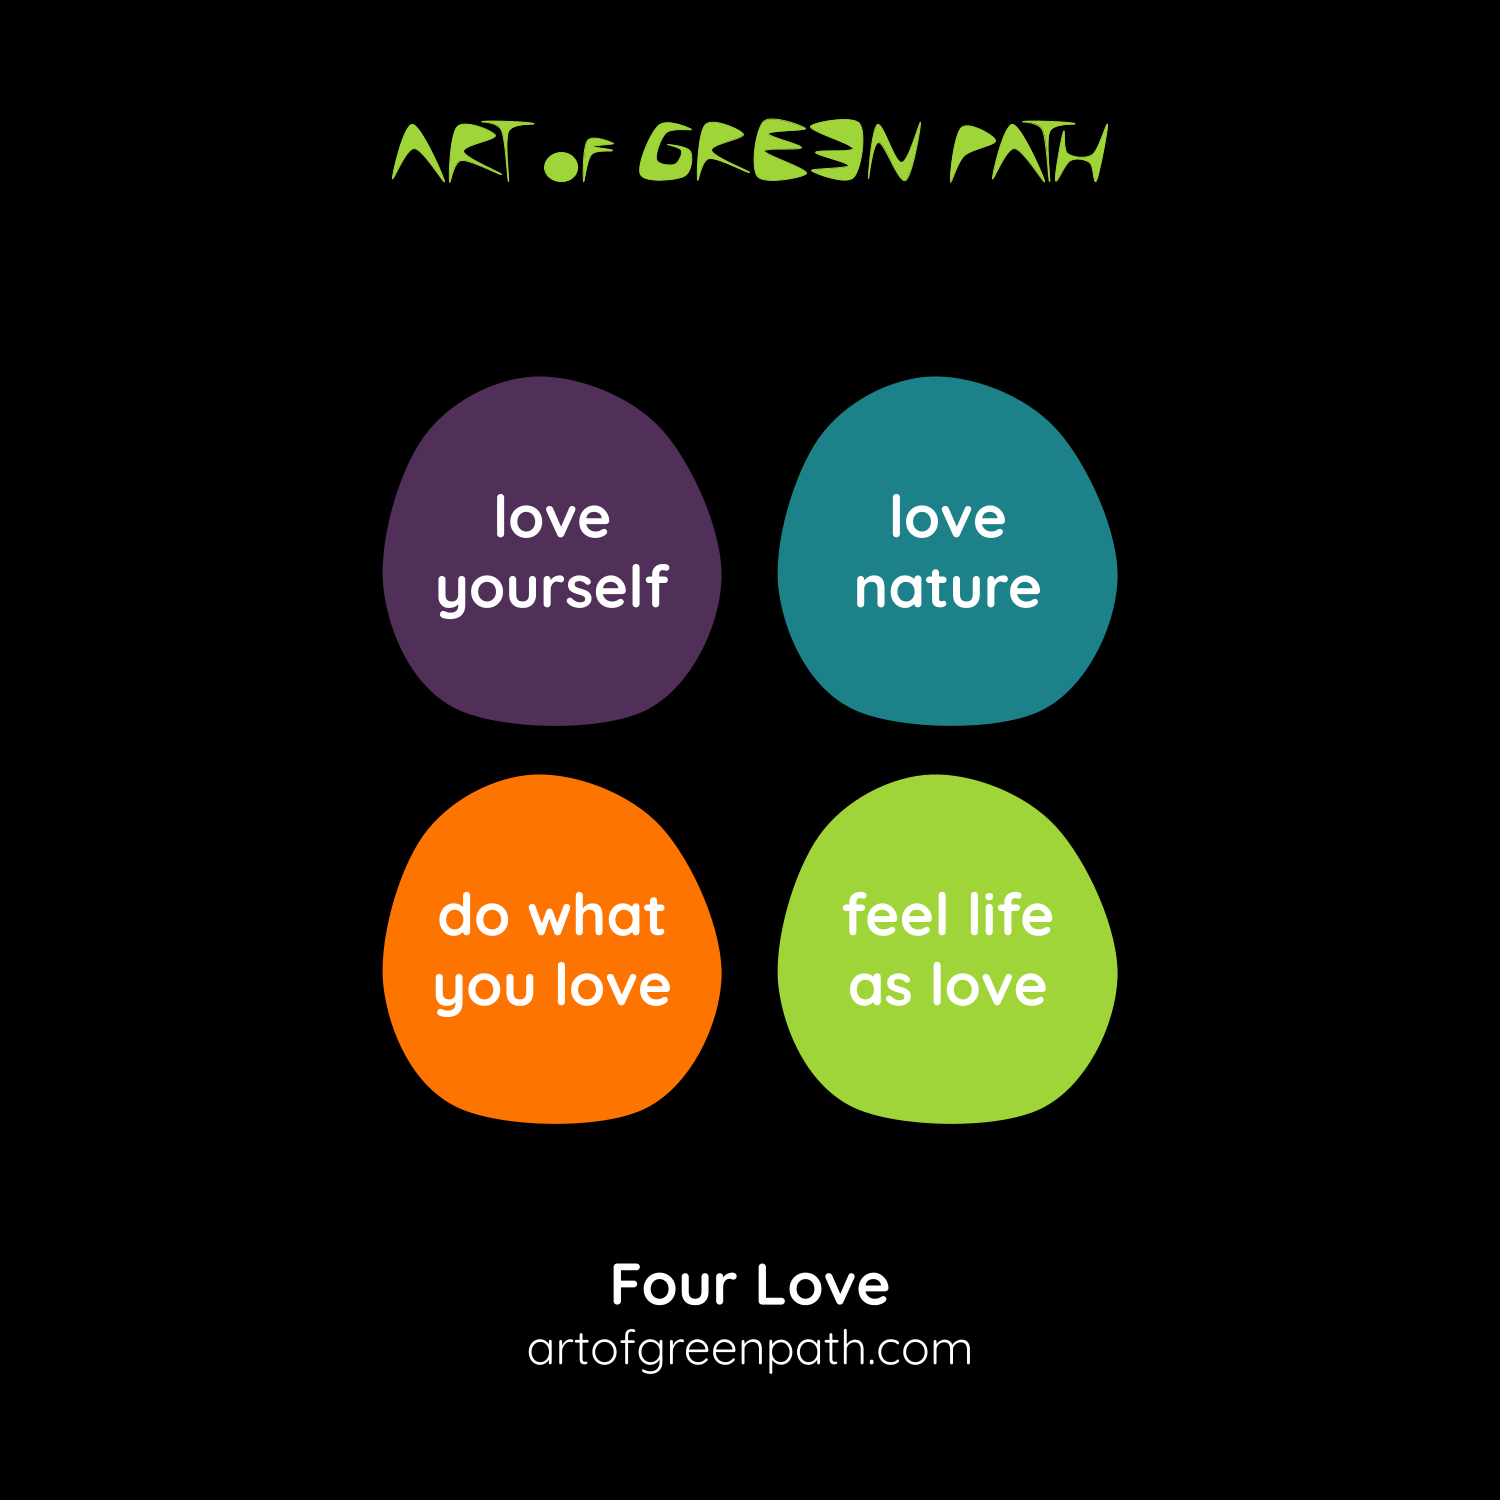 Art Of Green Path - Four Love